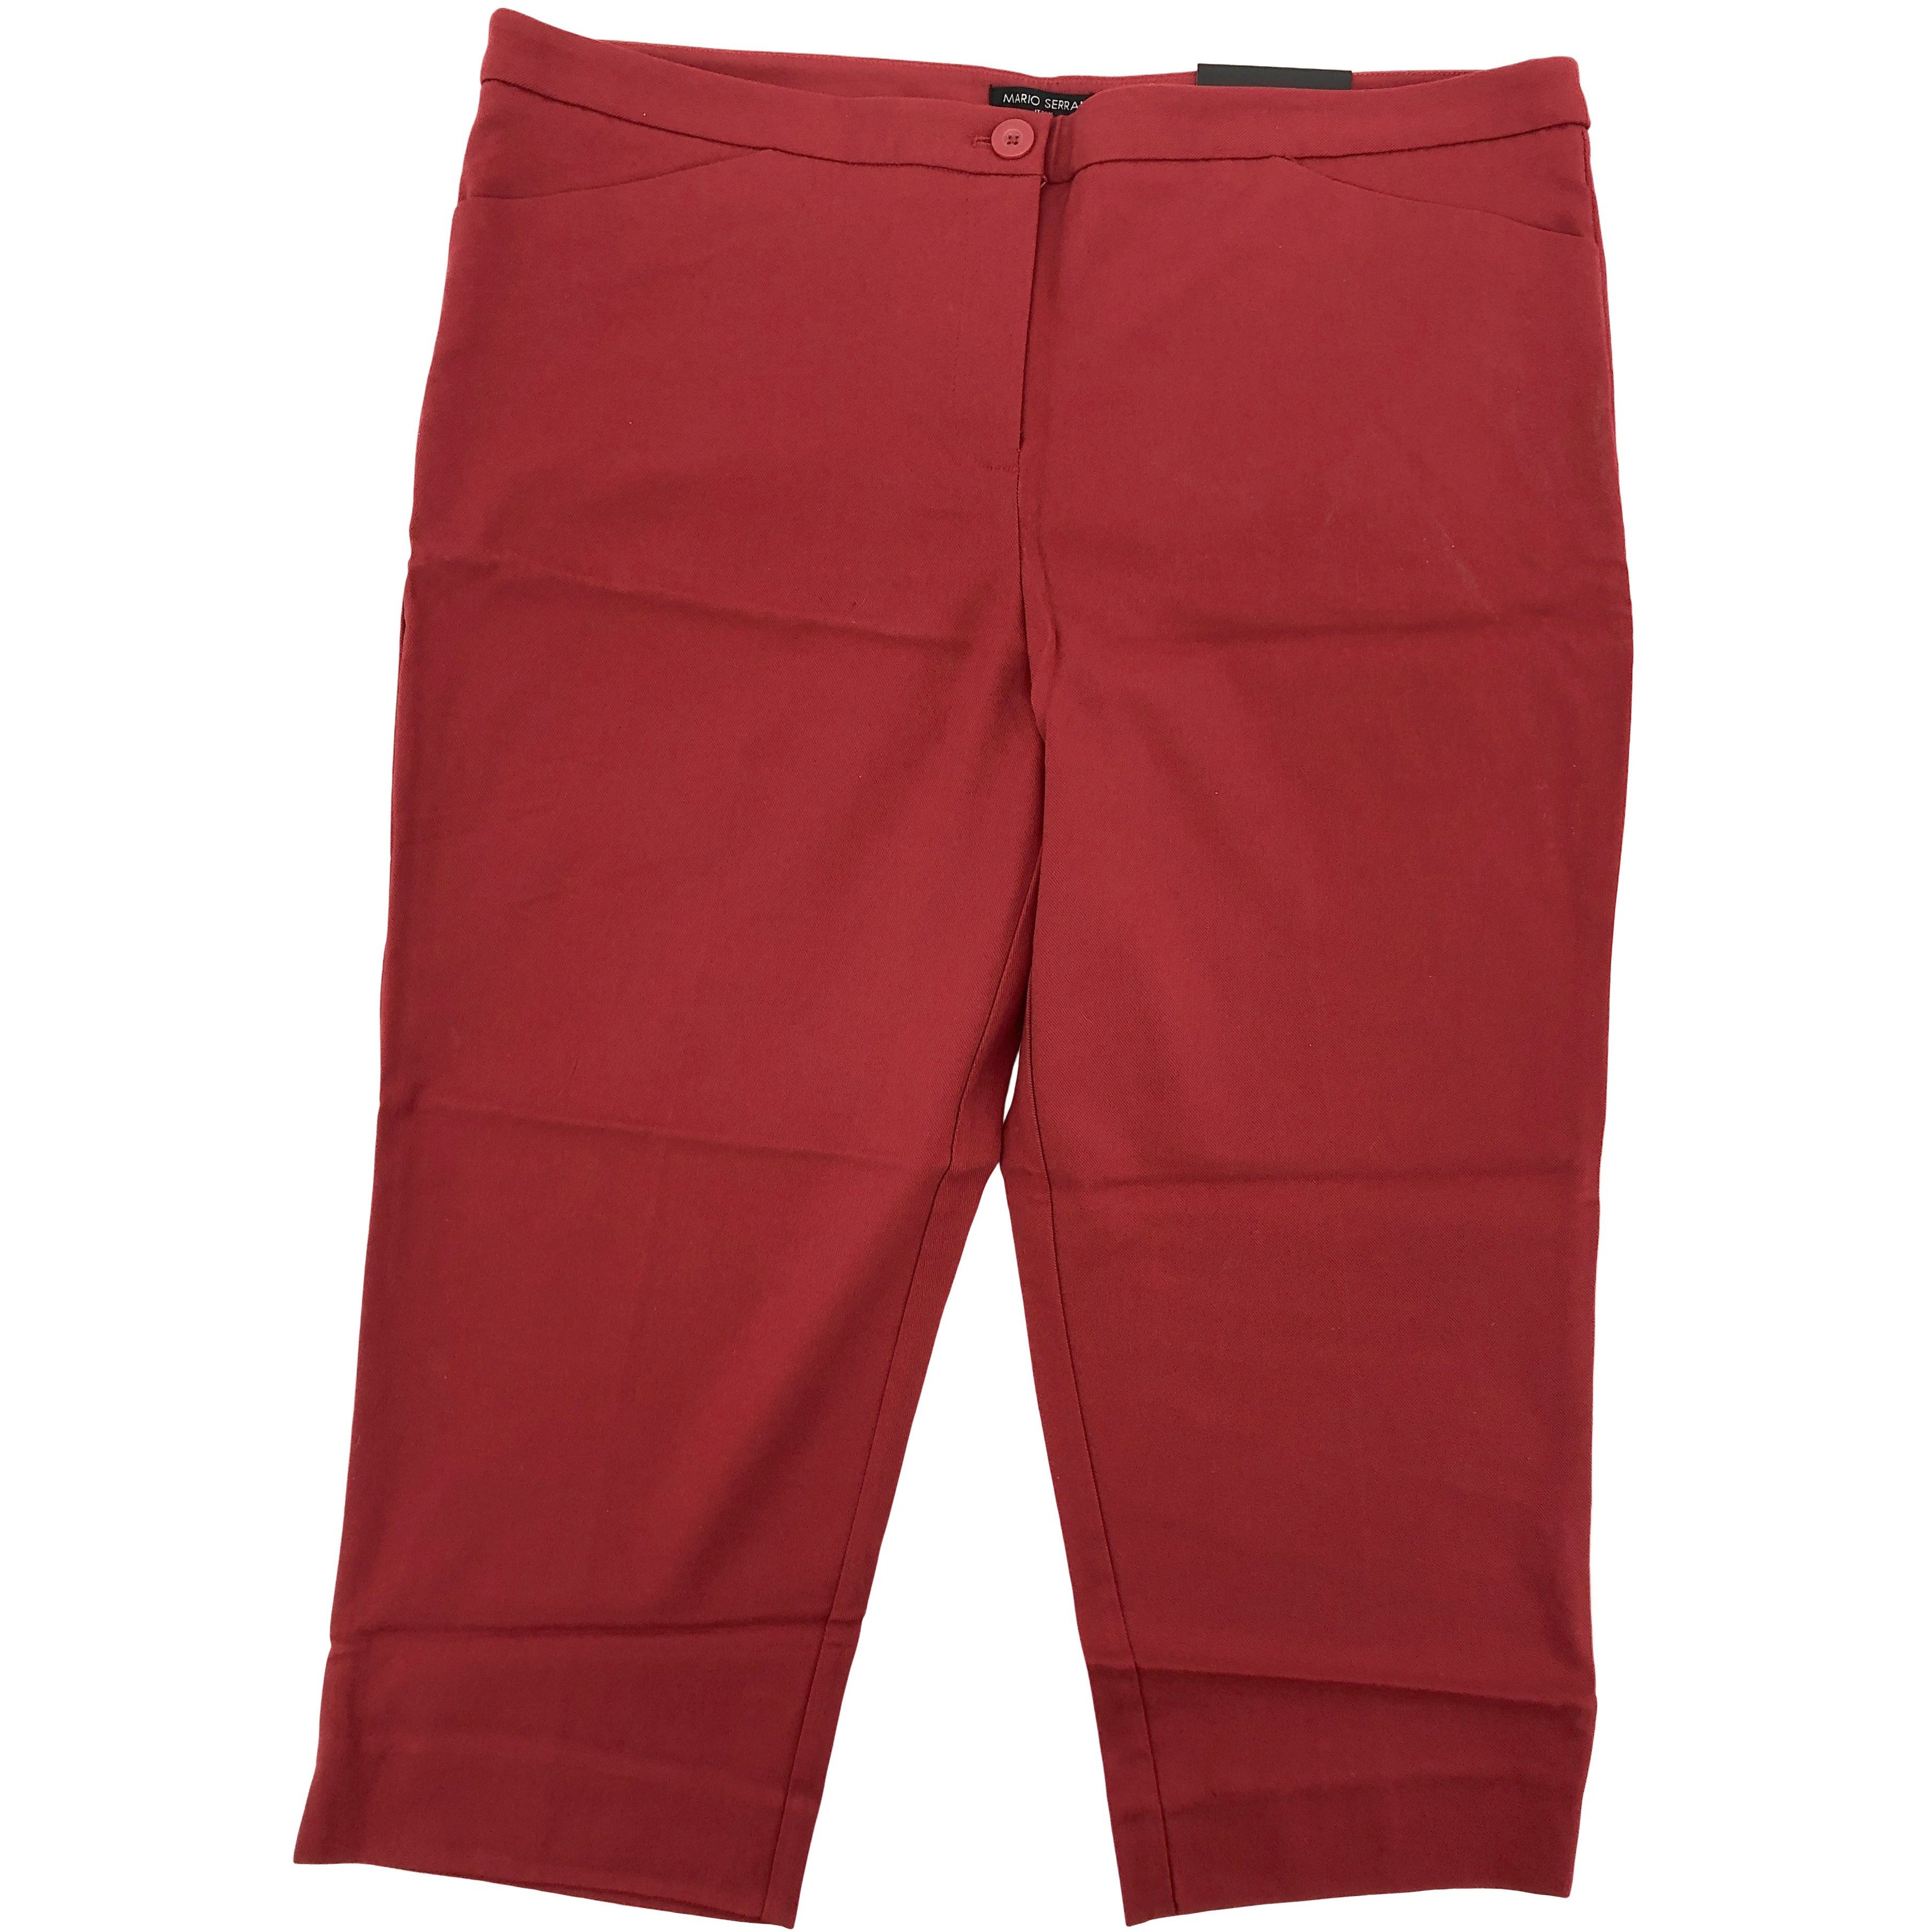 Mario Serrano Women's Capri Pants: Red / Various Sizes